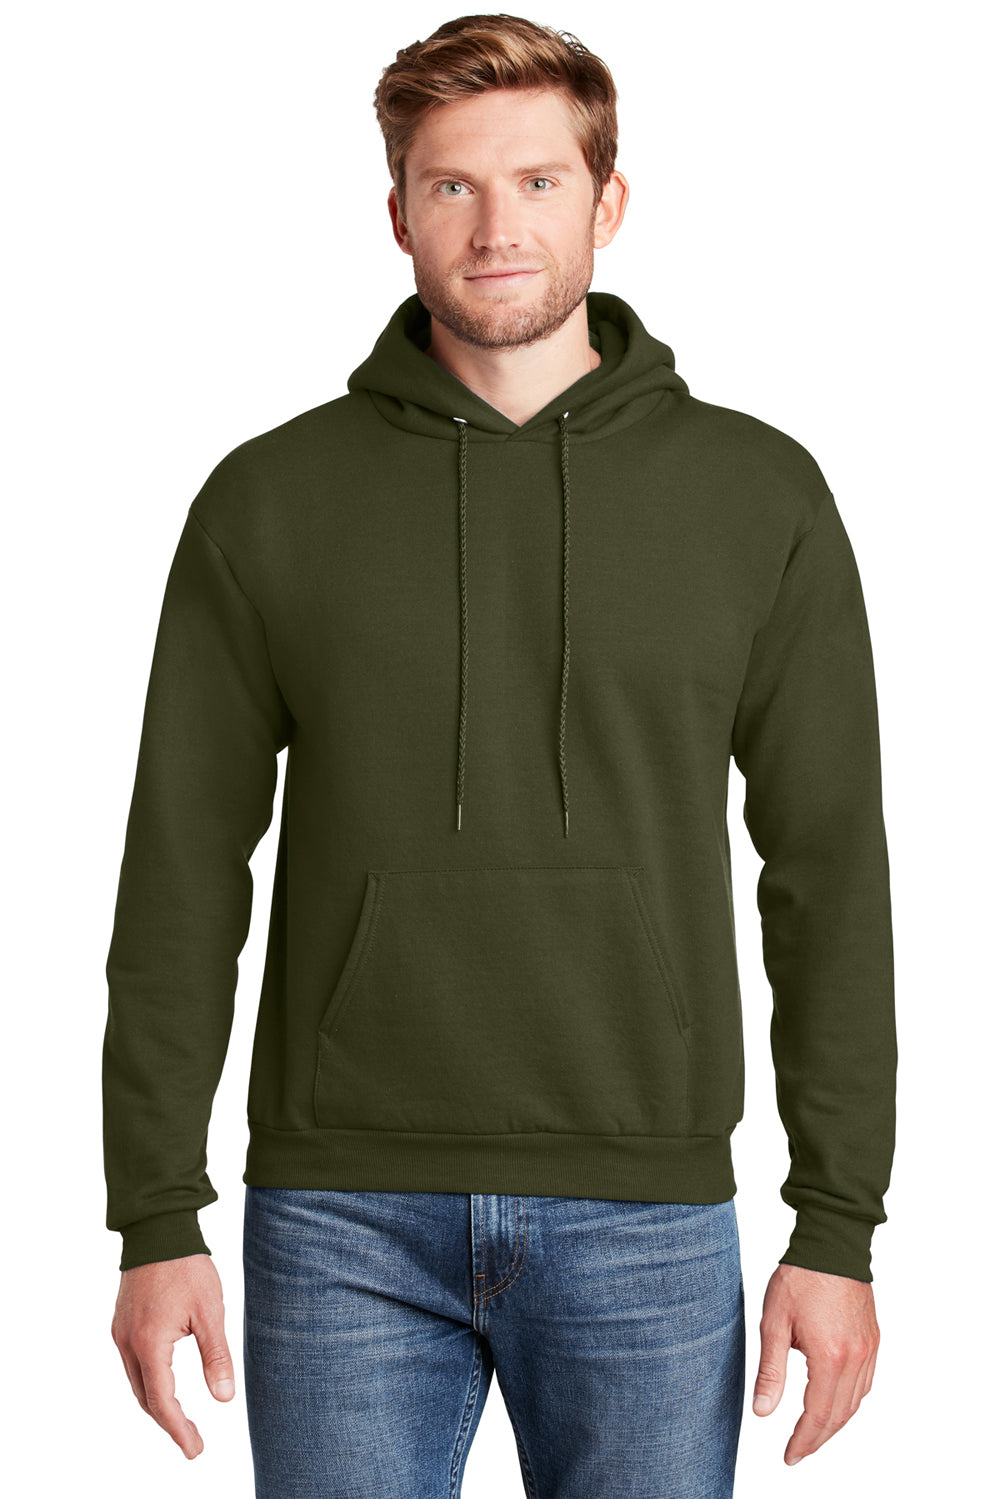 Hanes Men's Pullover Ecosmart Fleece Hooded Sweatshirt, Safety Orange, 3XL